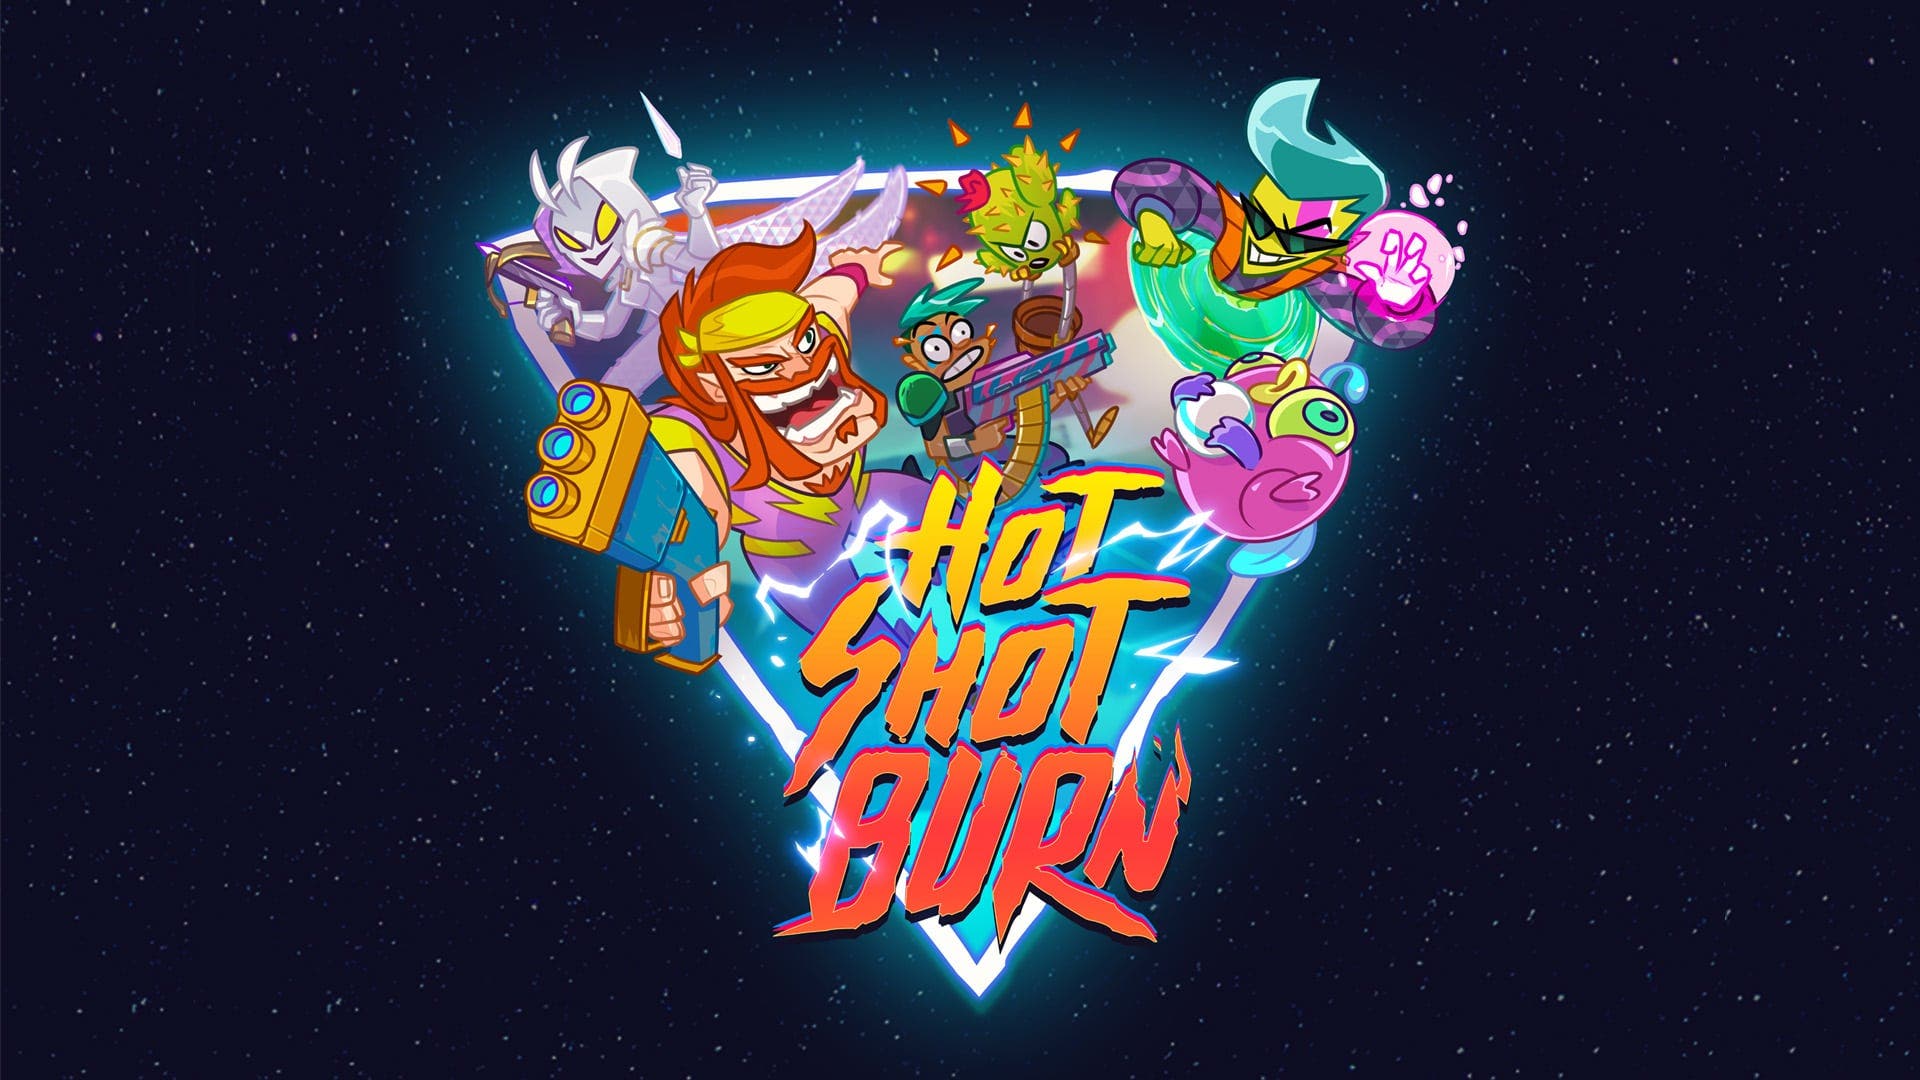 Hot Shot Burn se lanza en 2020 para Nintendo Switch